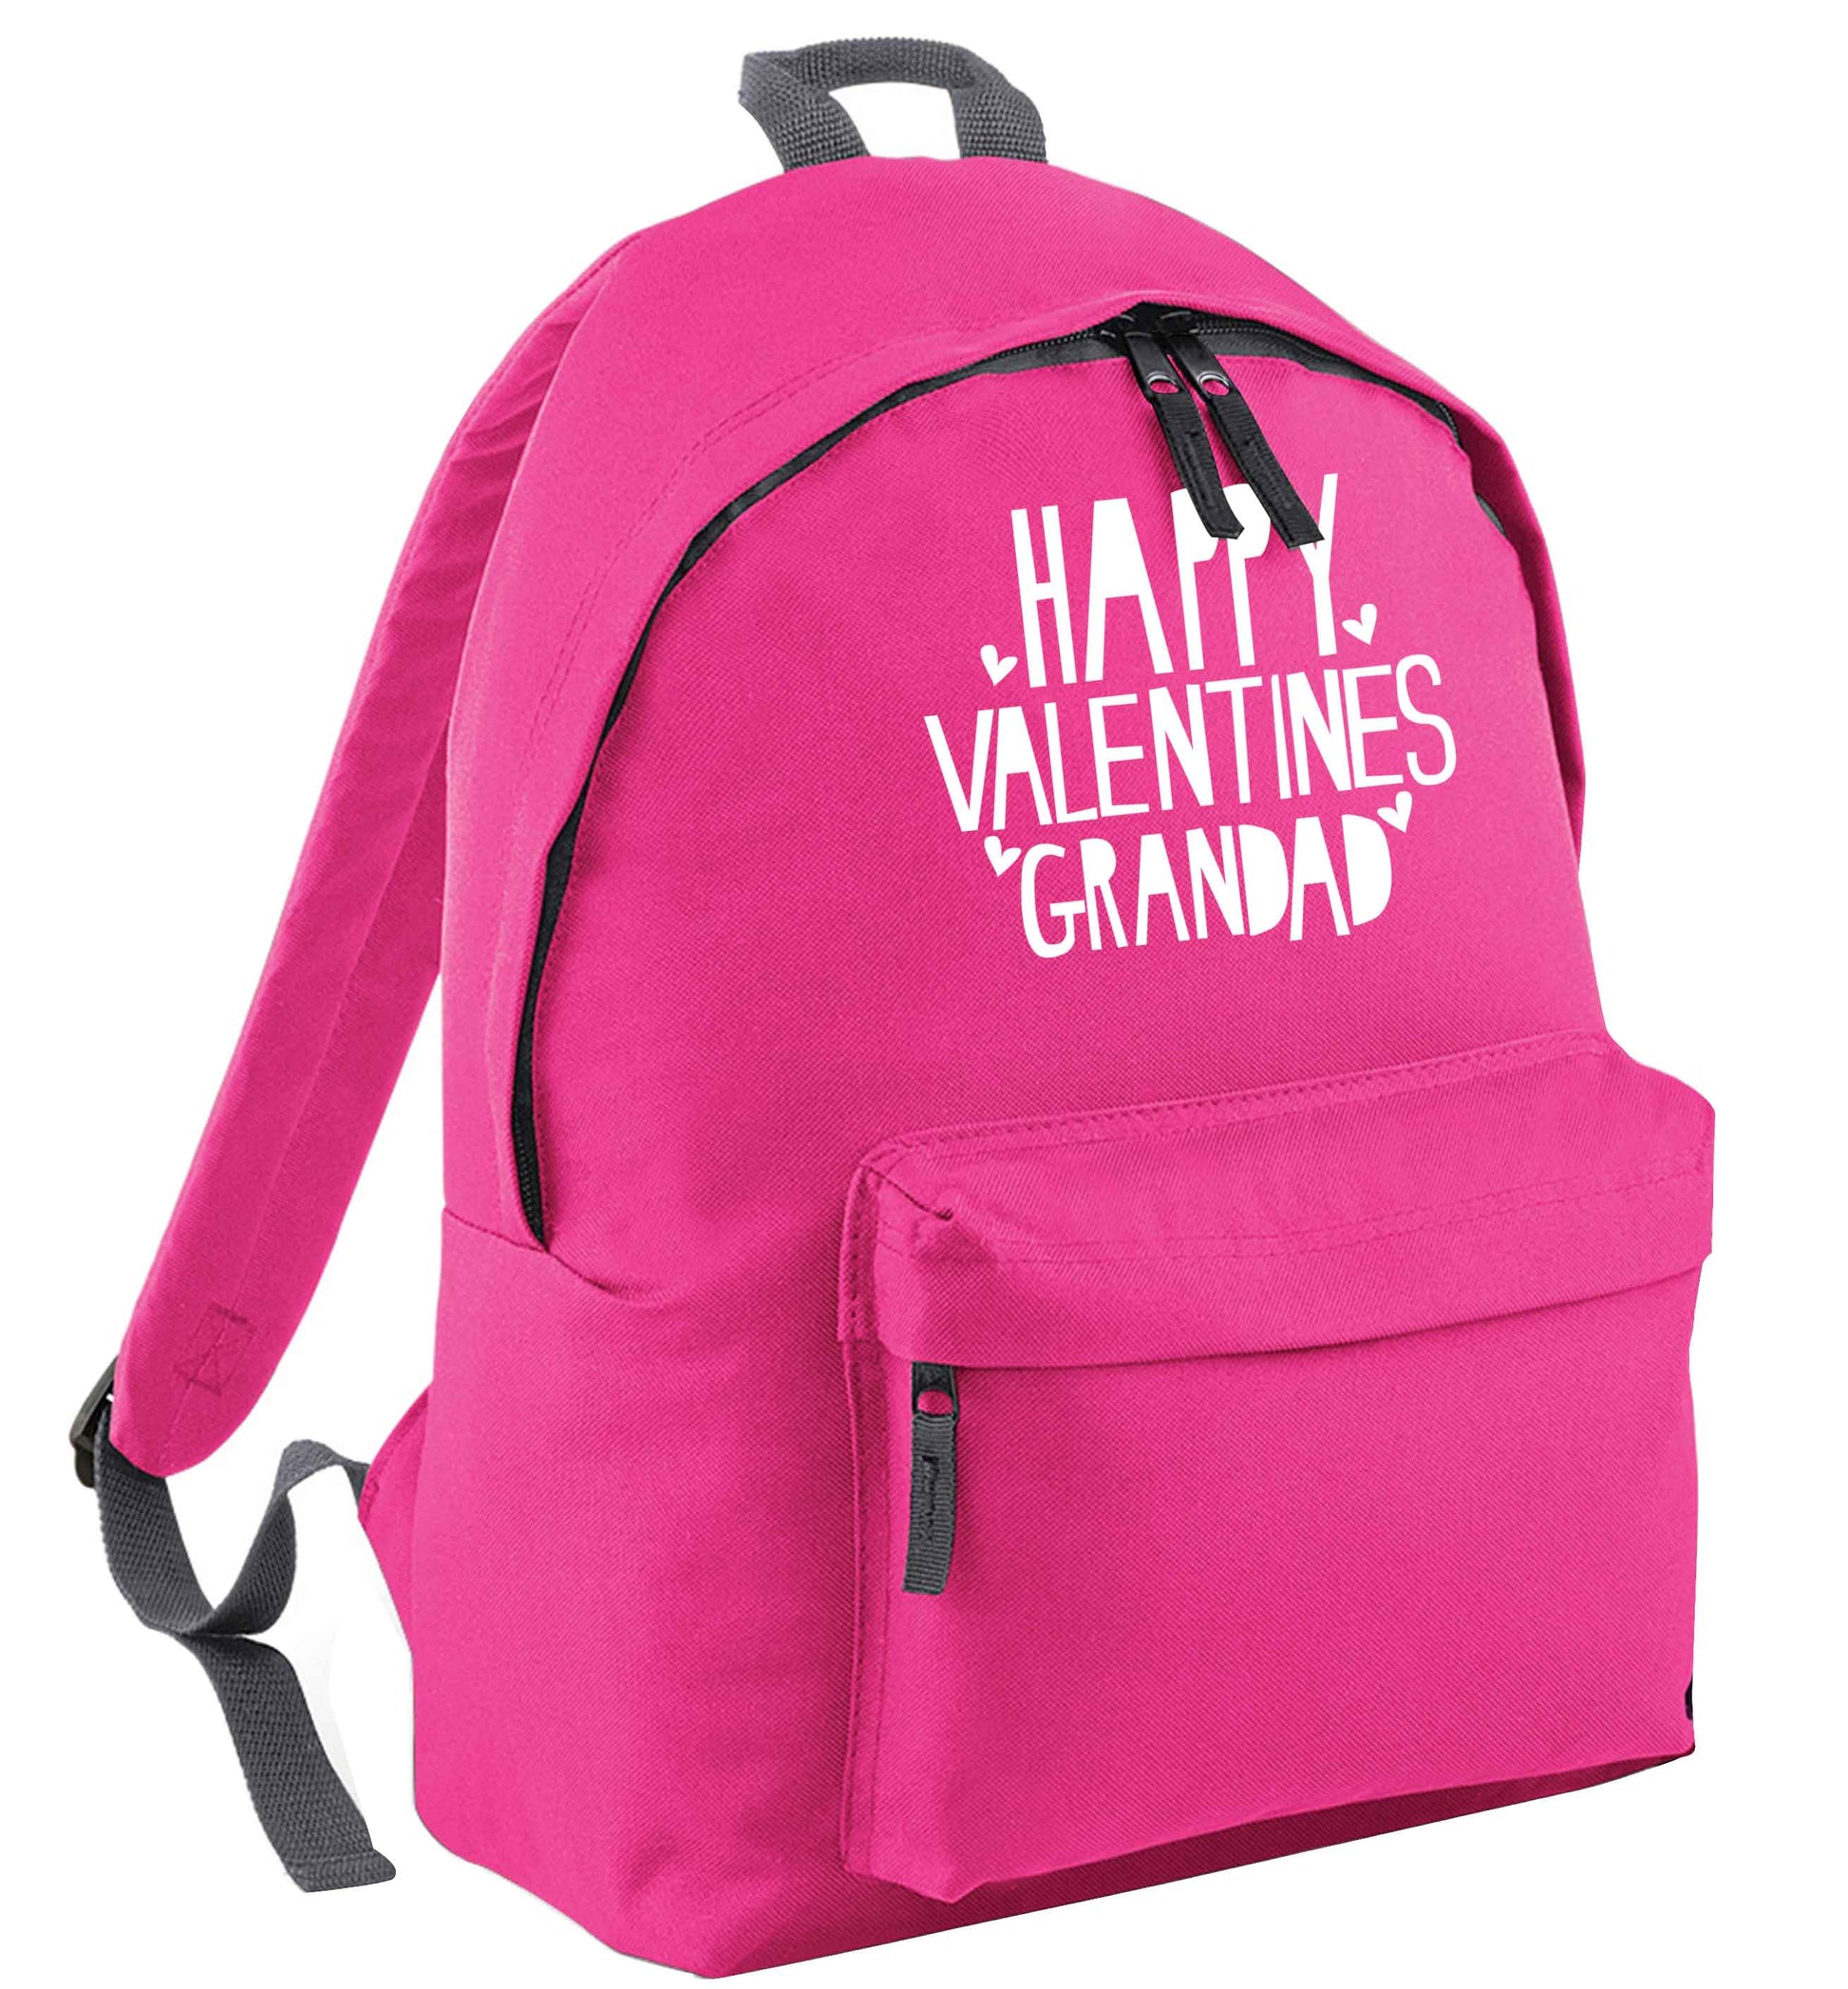 Happy valentines grandad pink adults backpack